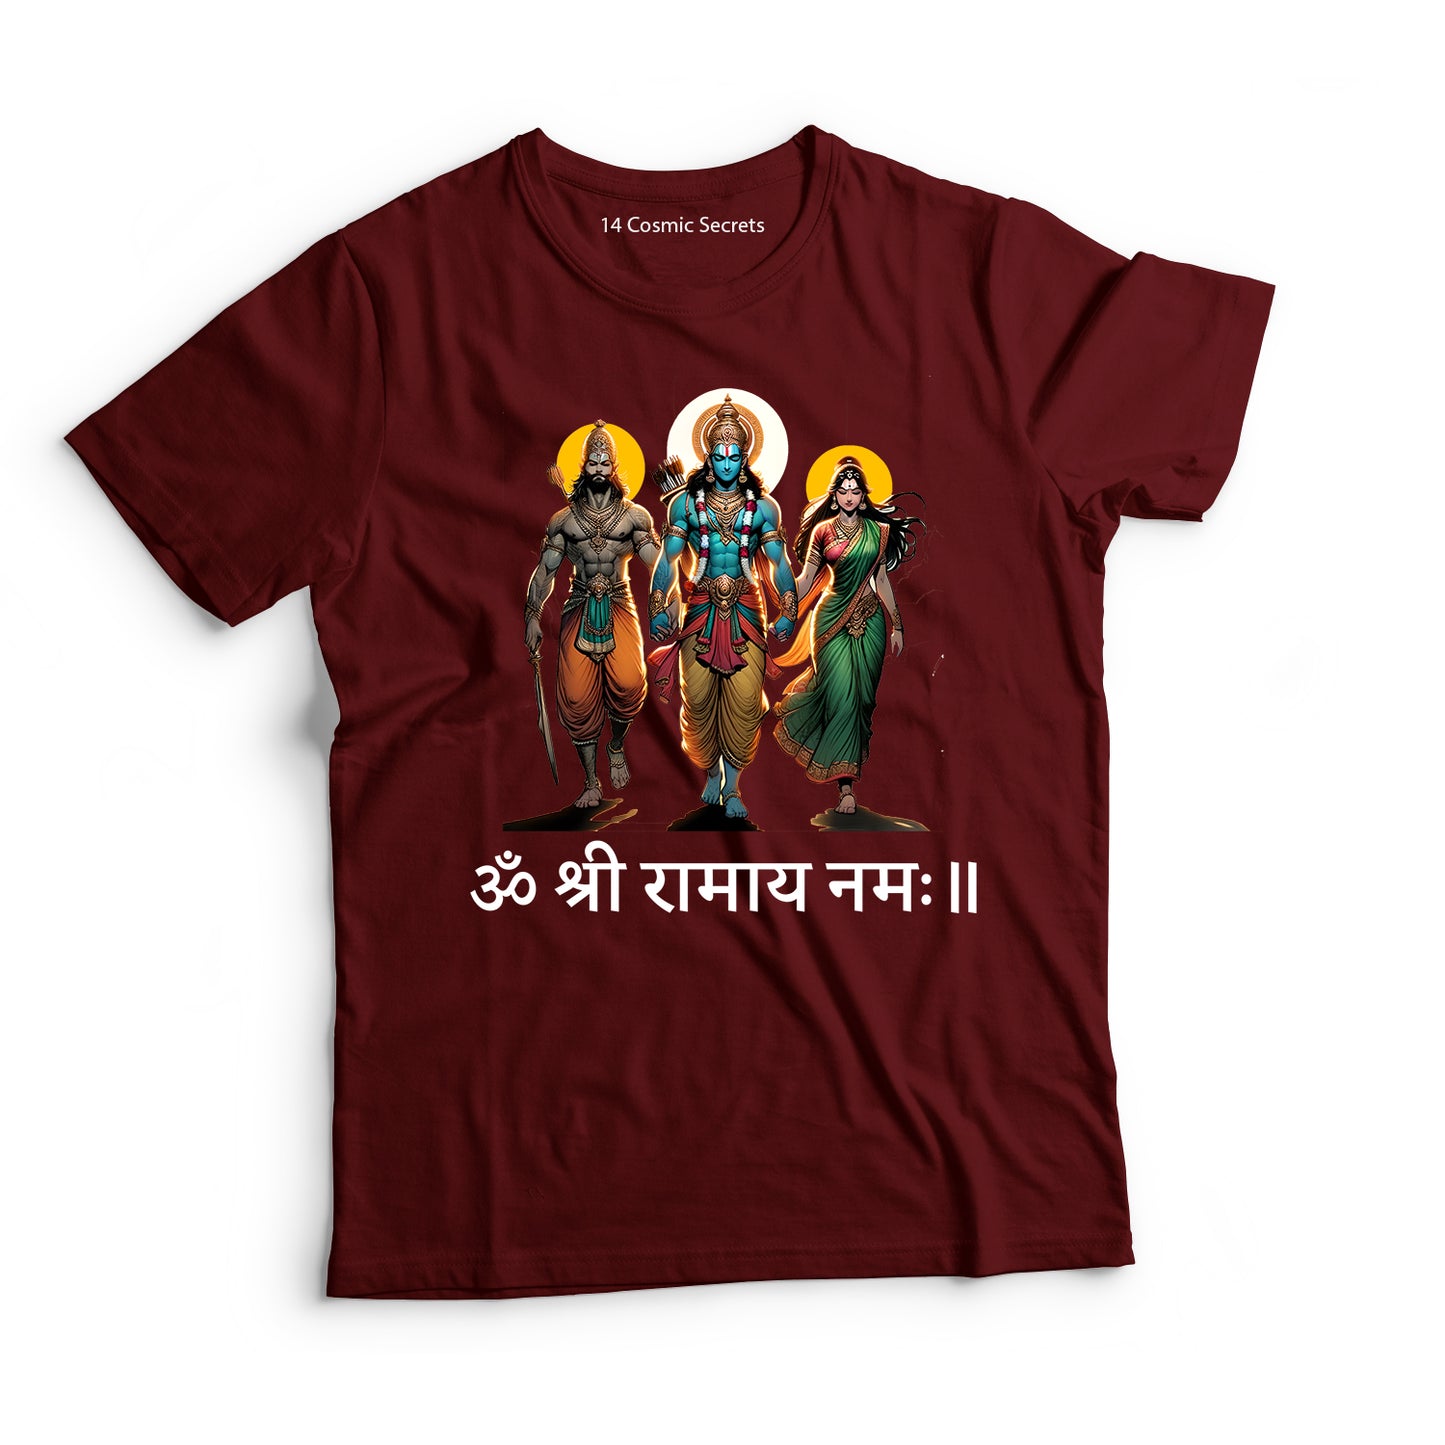 Epic of Ramayana: Hero's Tale Graphic Printed T-Shirt for Men Cotton T-Shirt Original Super Heroes of India T-Shirt